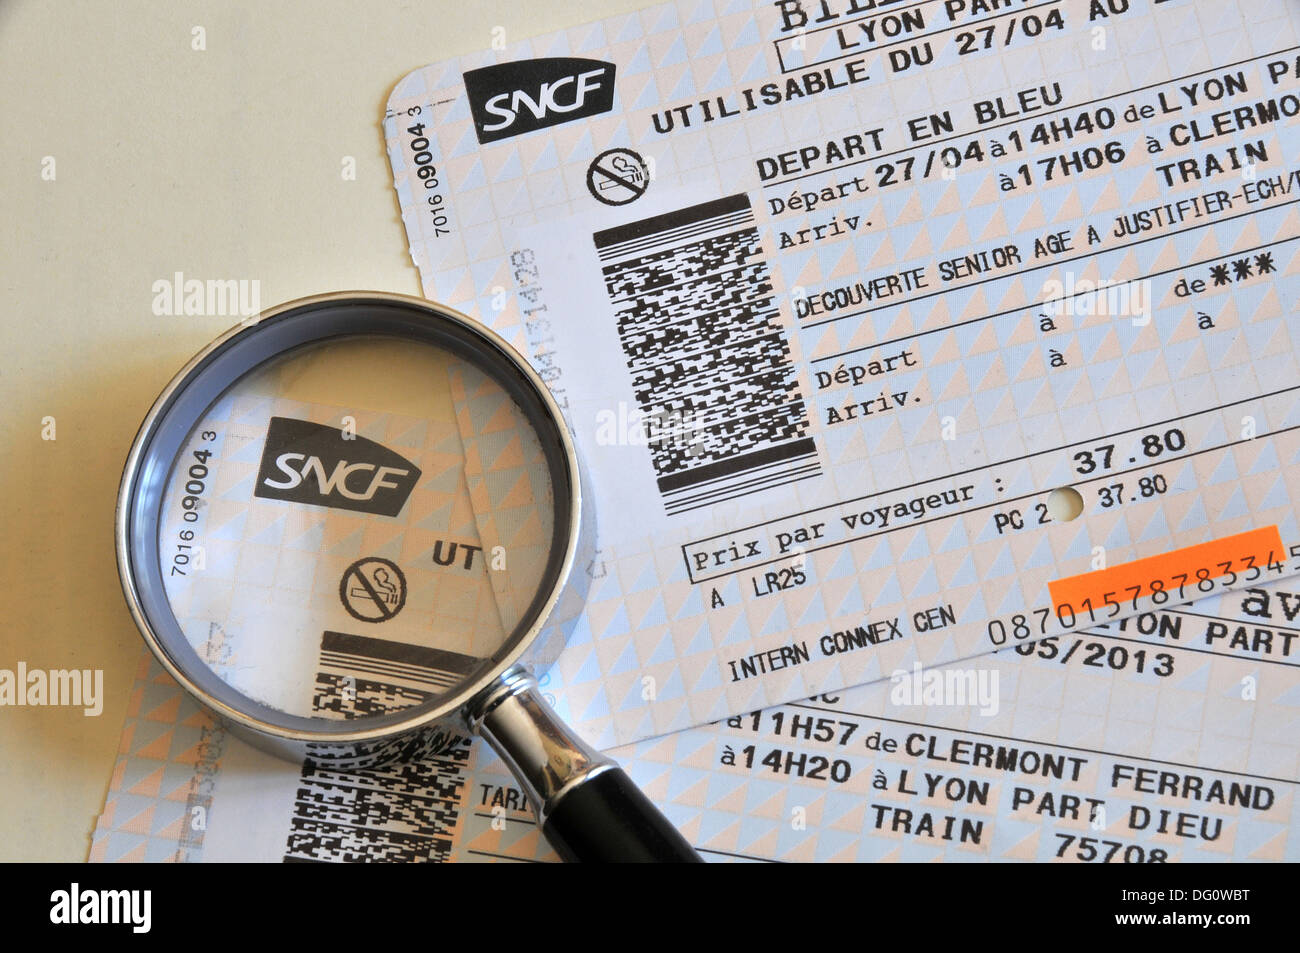 SNCF train ticket Stock Photo